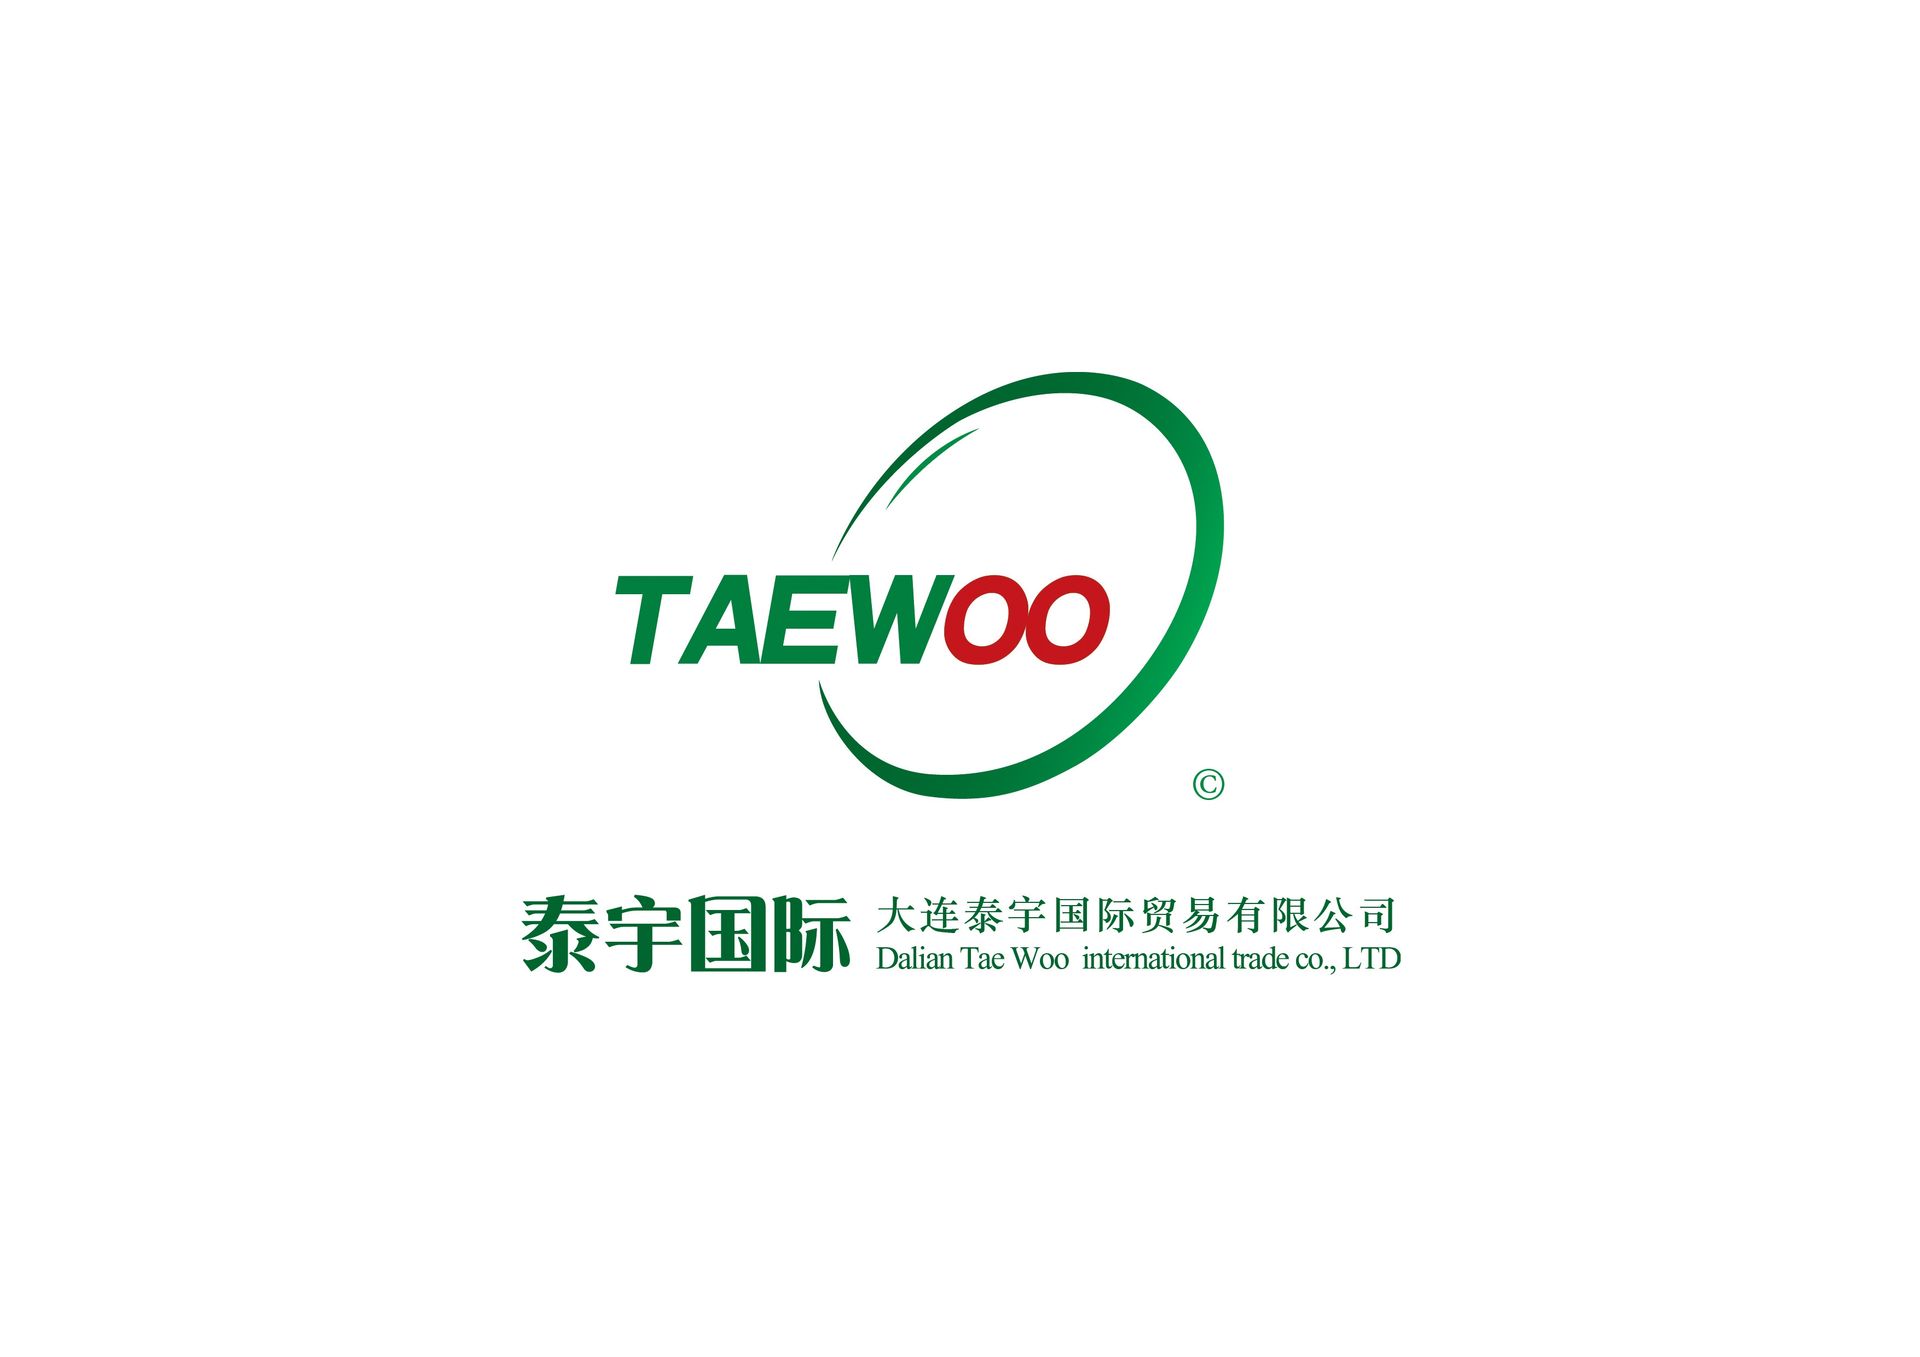 DALIAN TAEWOO INTERNATIONAL TRADE CO.,LTD logo